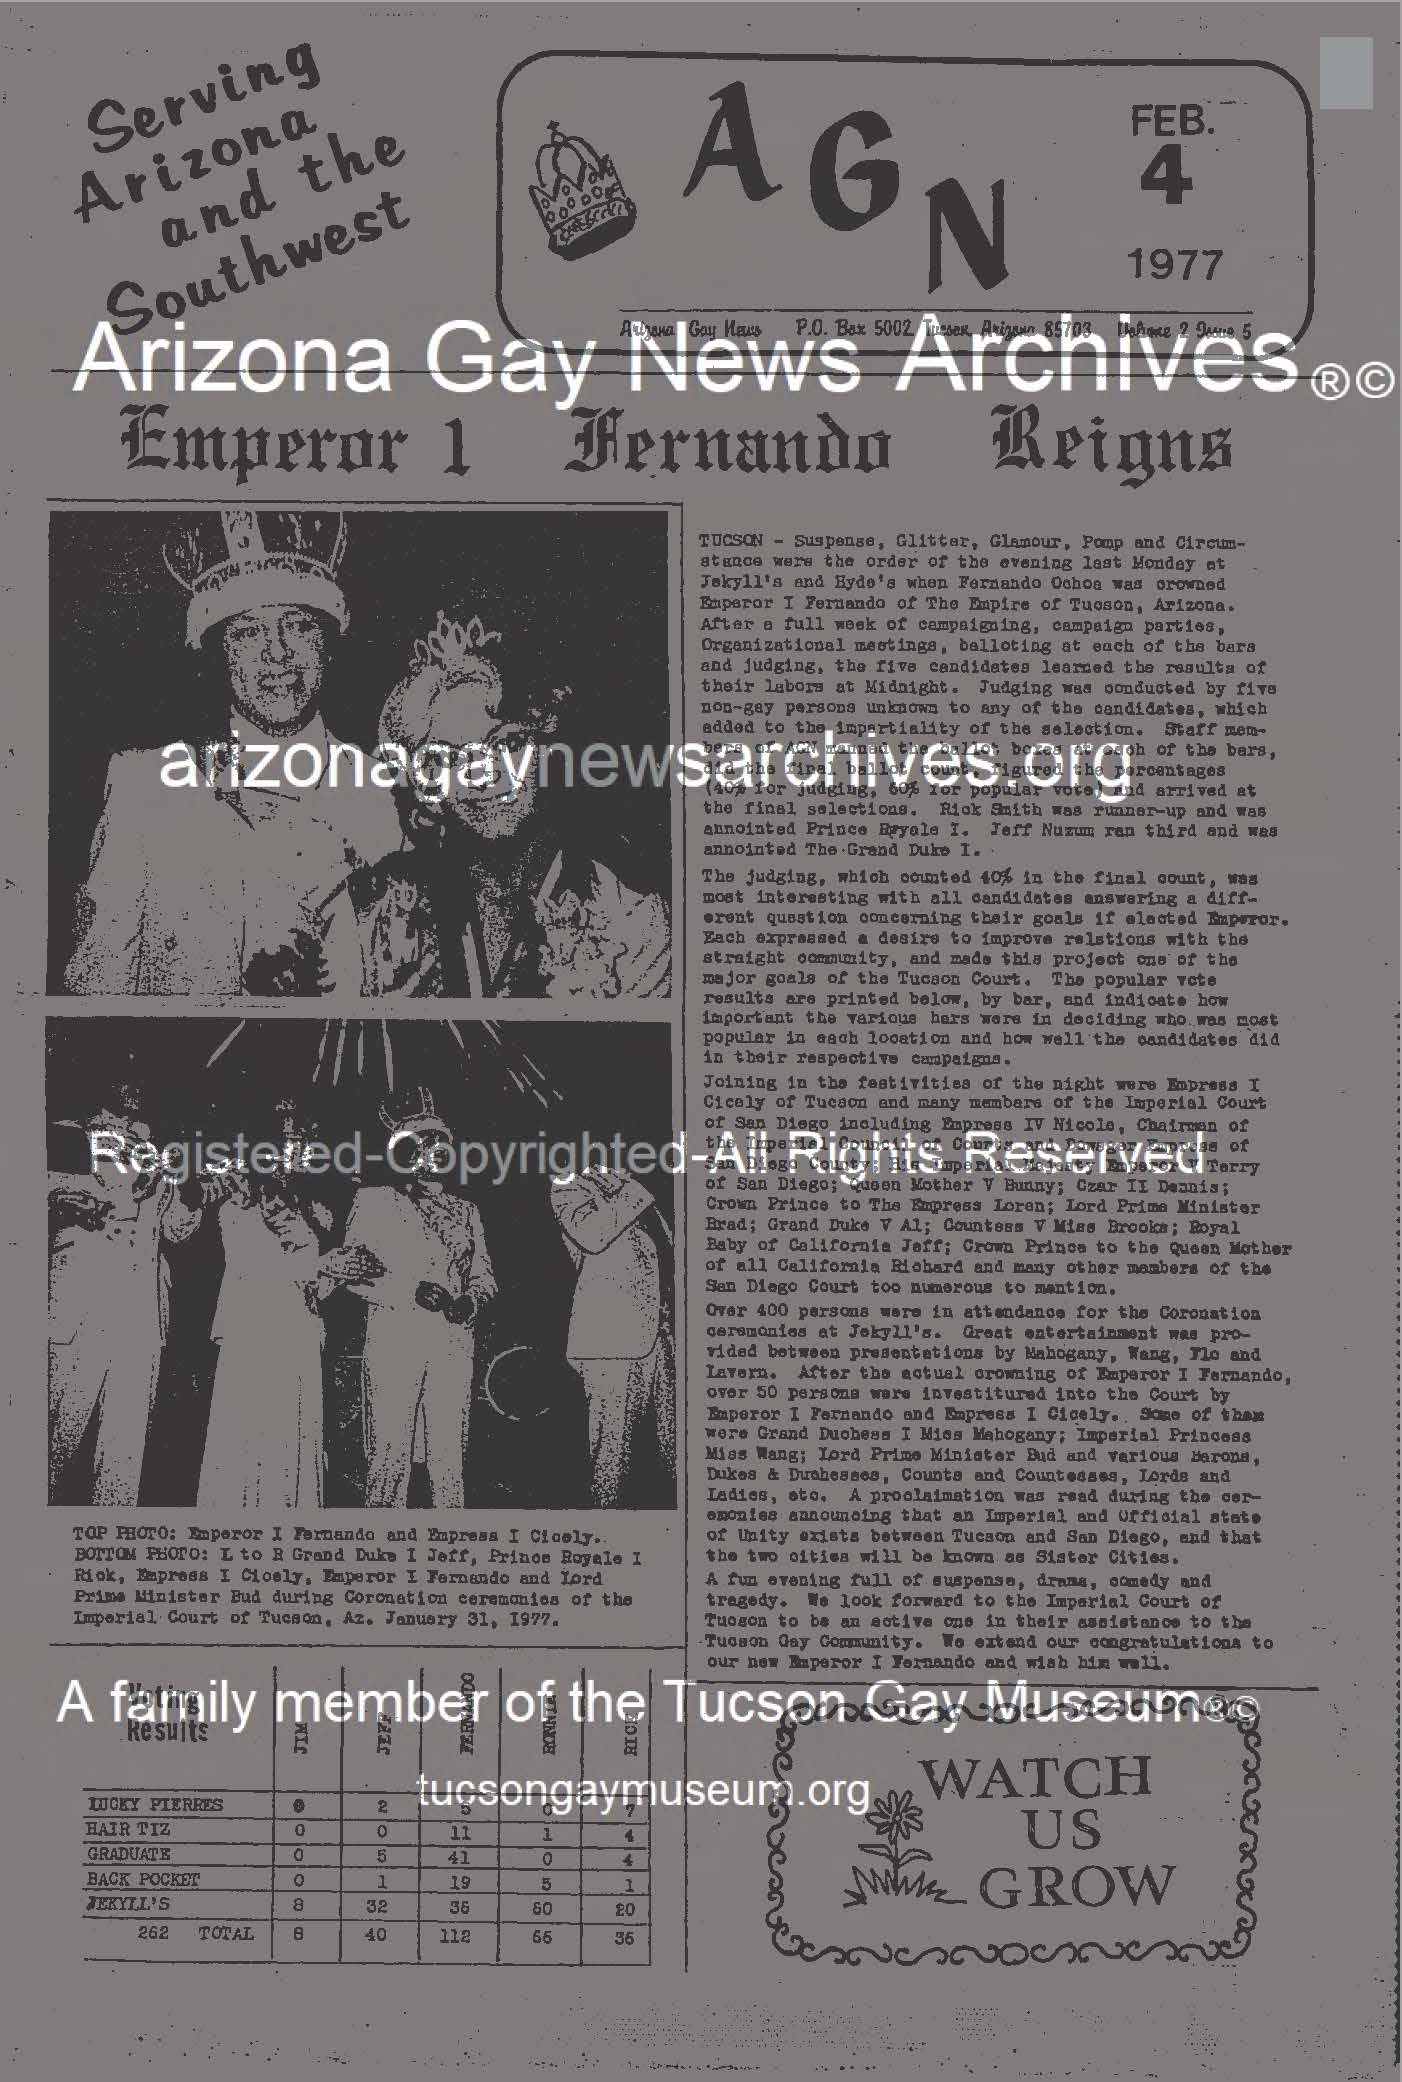 Arizona Gay News 1977 Issue Copyrighted Photo  